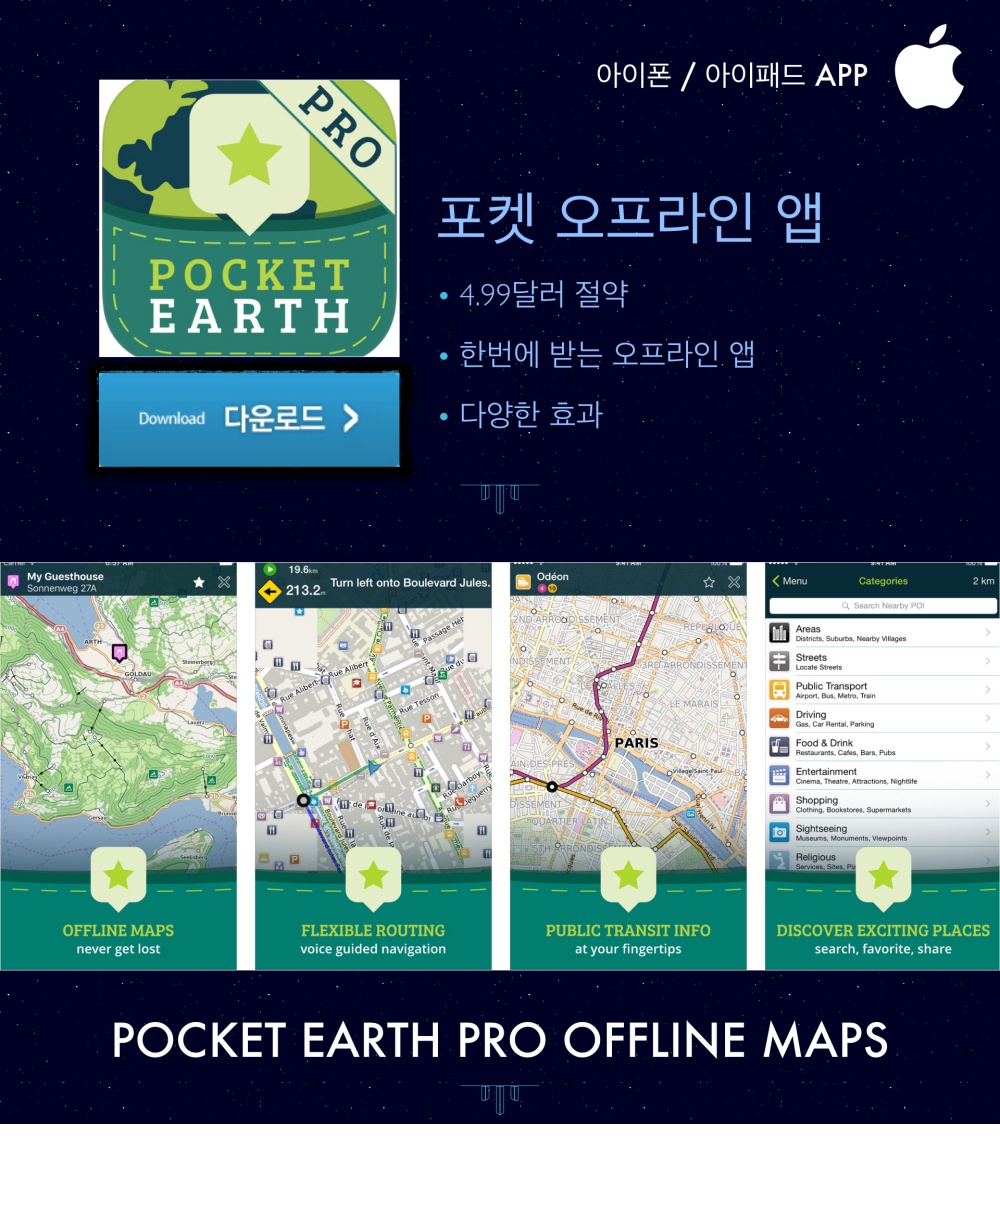 https://itunes.apple.com/kr/app/pocket-earth-pro-offline-maps/id481679745?mt=8